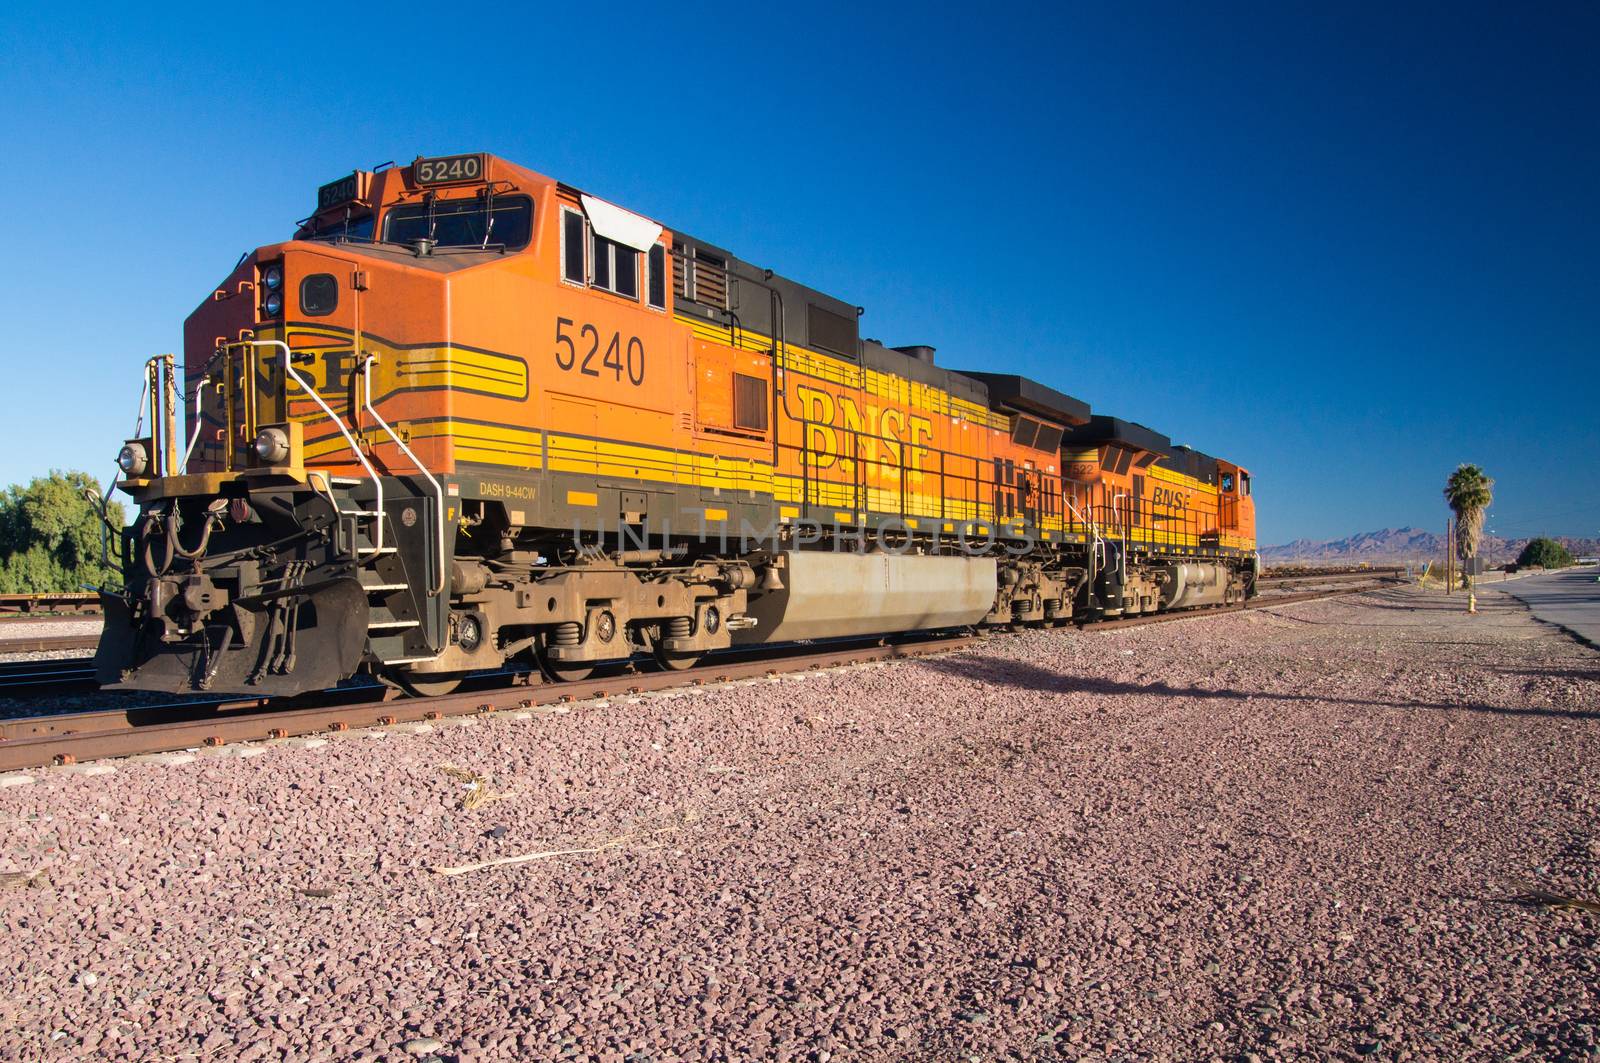 BNSF Freight Train Locomotives No. 5240 in the desert  by emattil